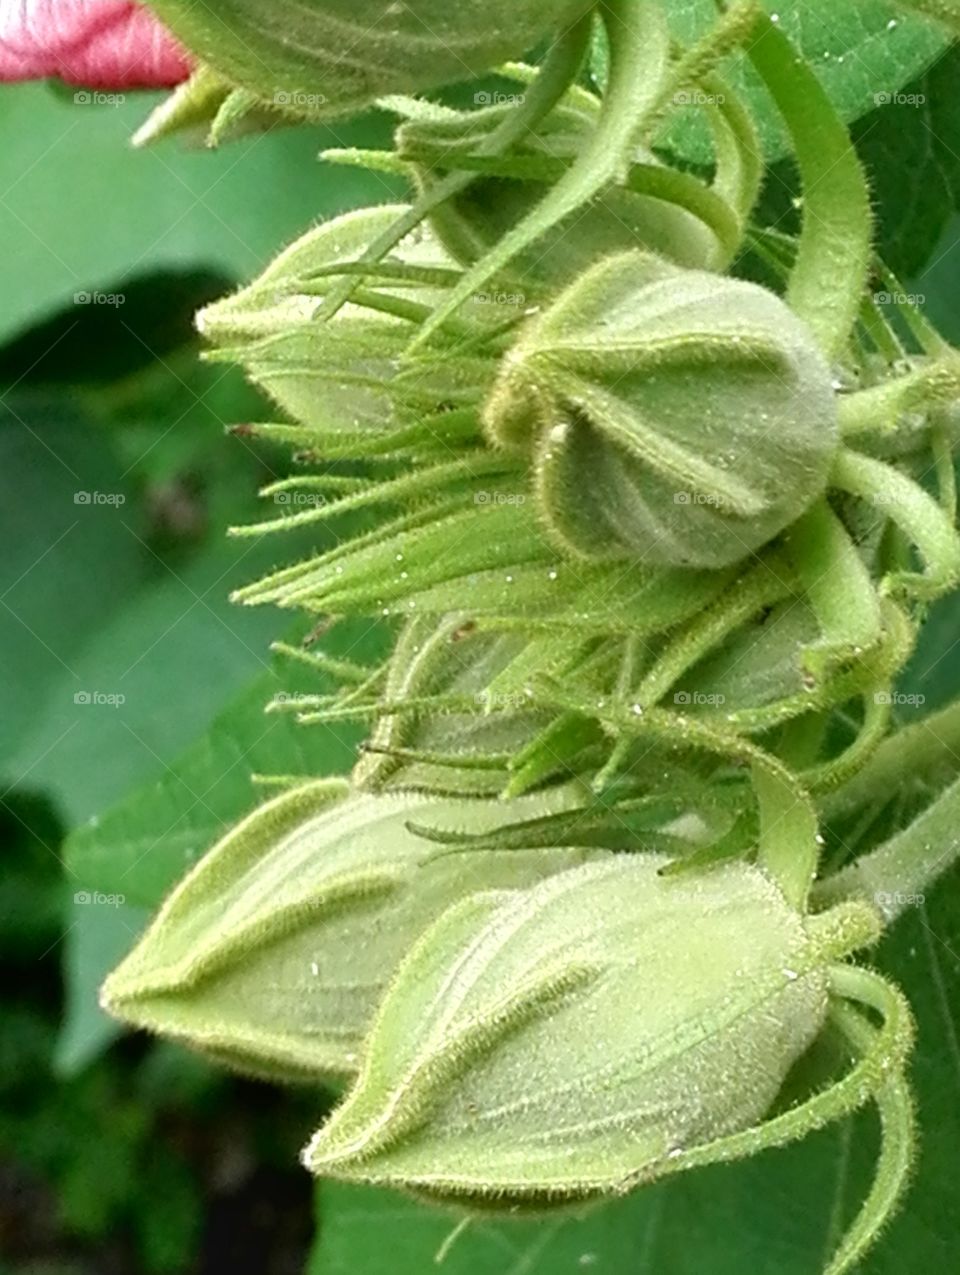 Flower buds - cotton rose